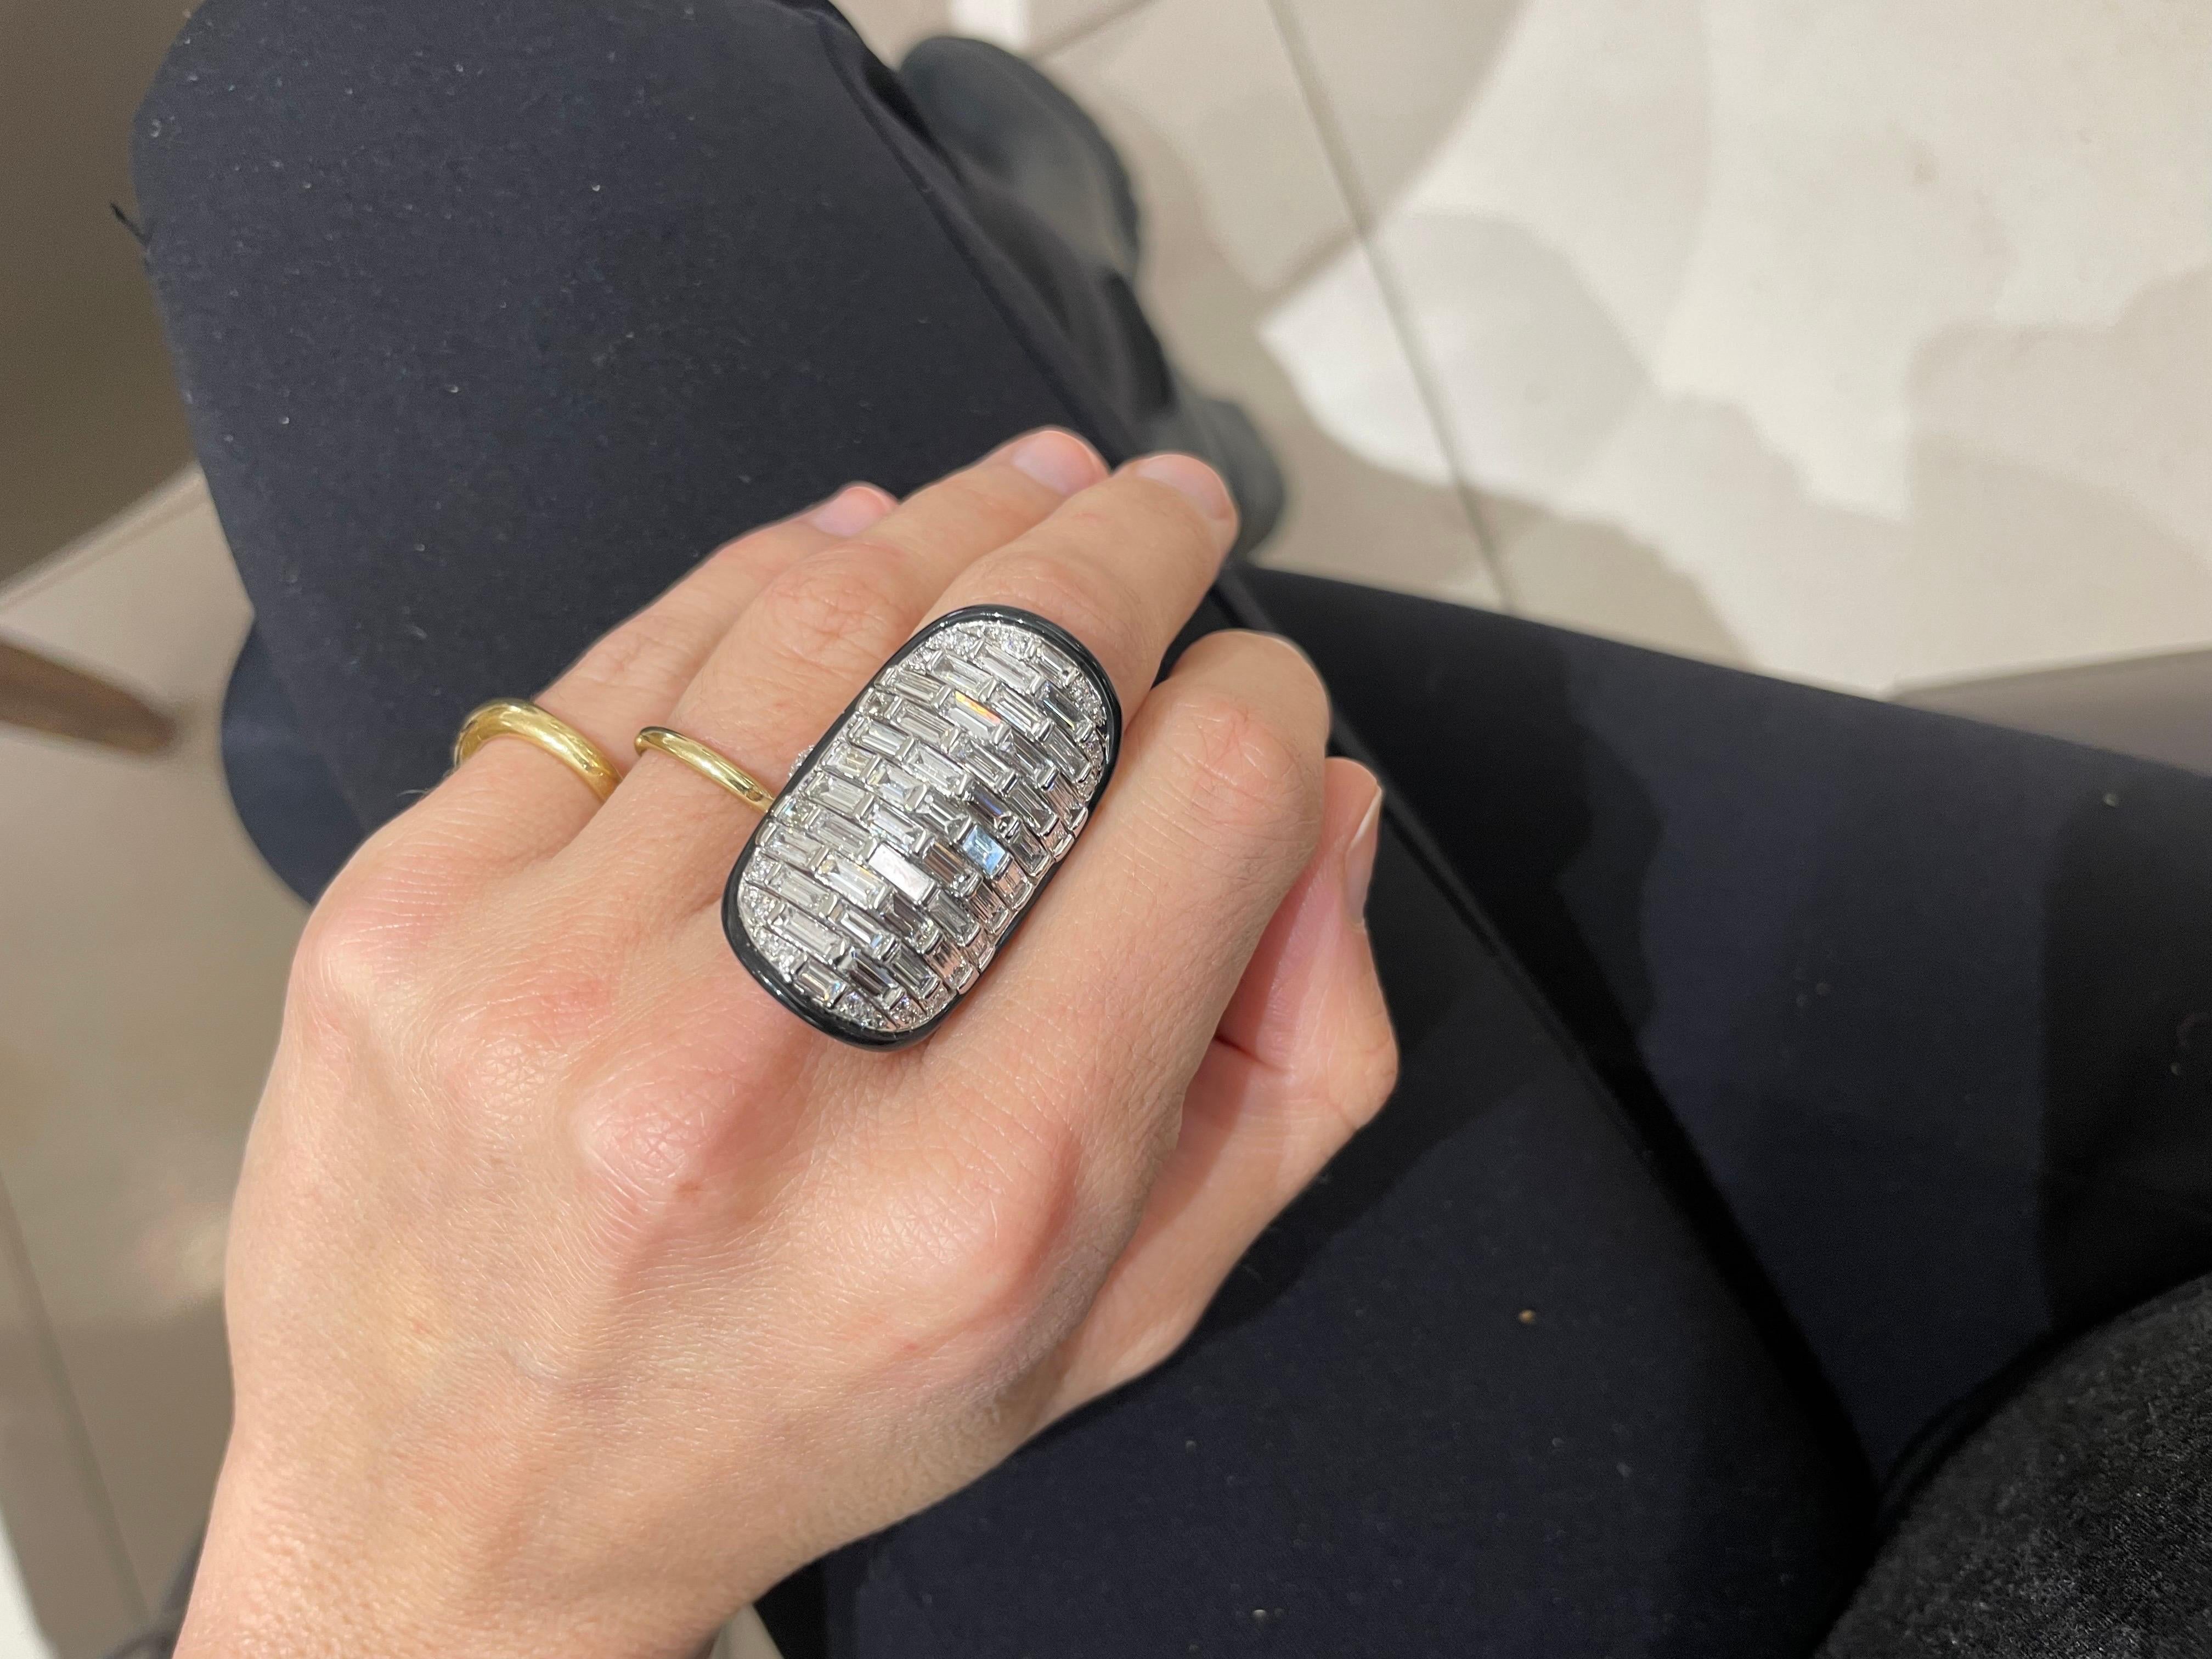 Art Deco inspired 18 karat white gold and diamond ring. The lengthy 1-1/4